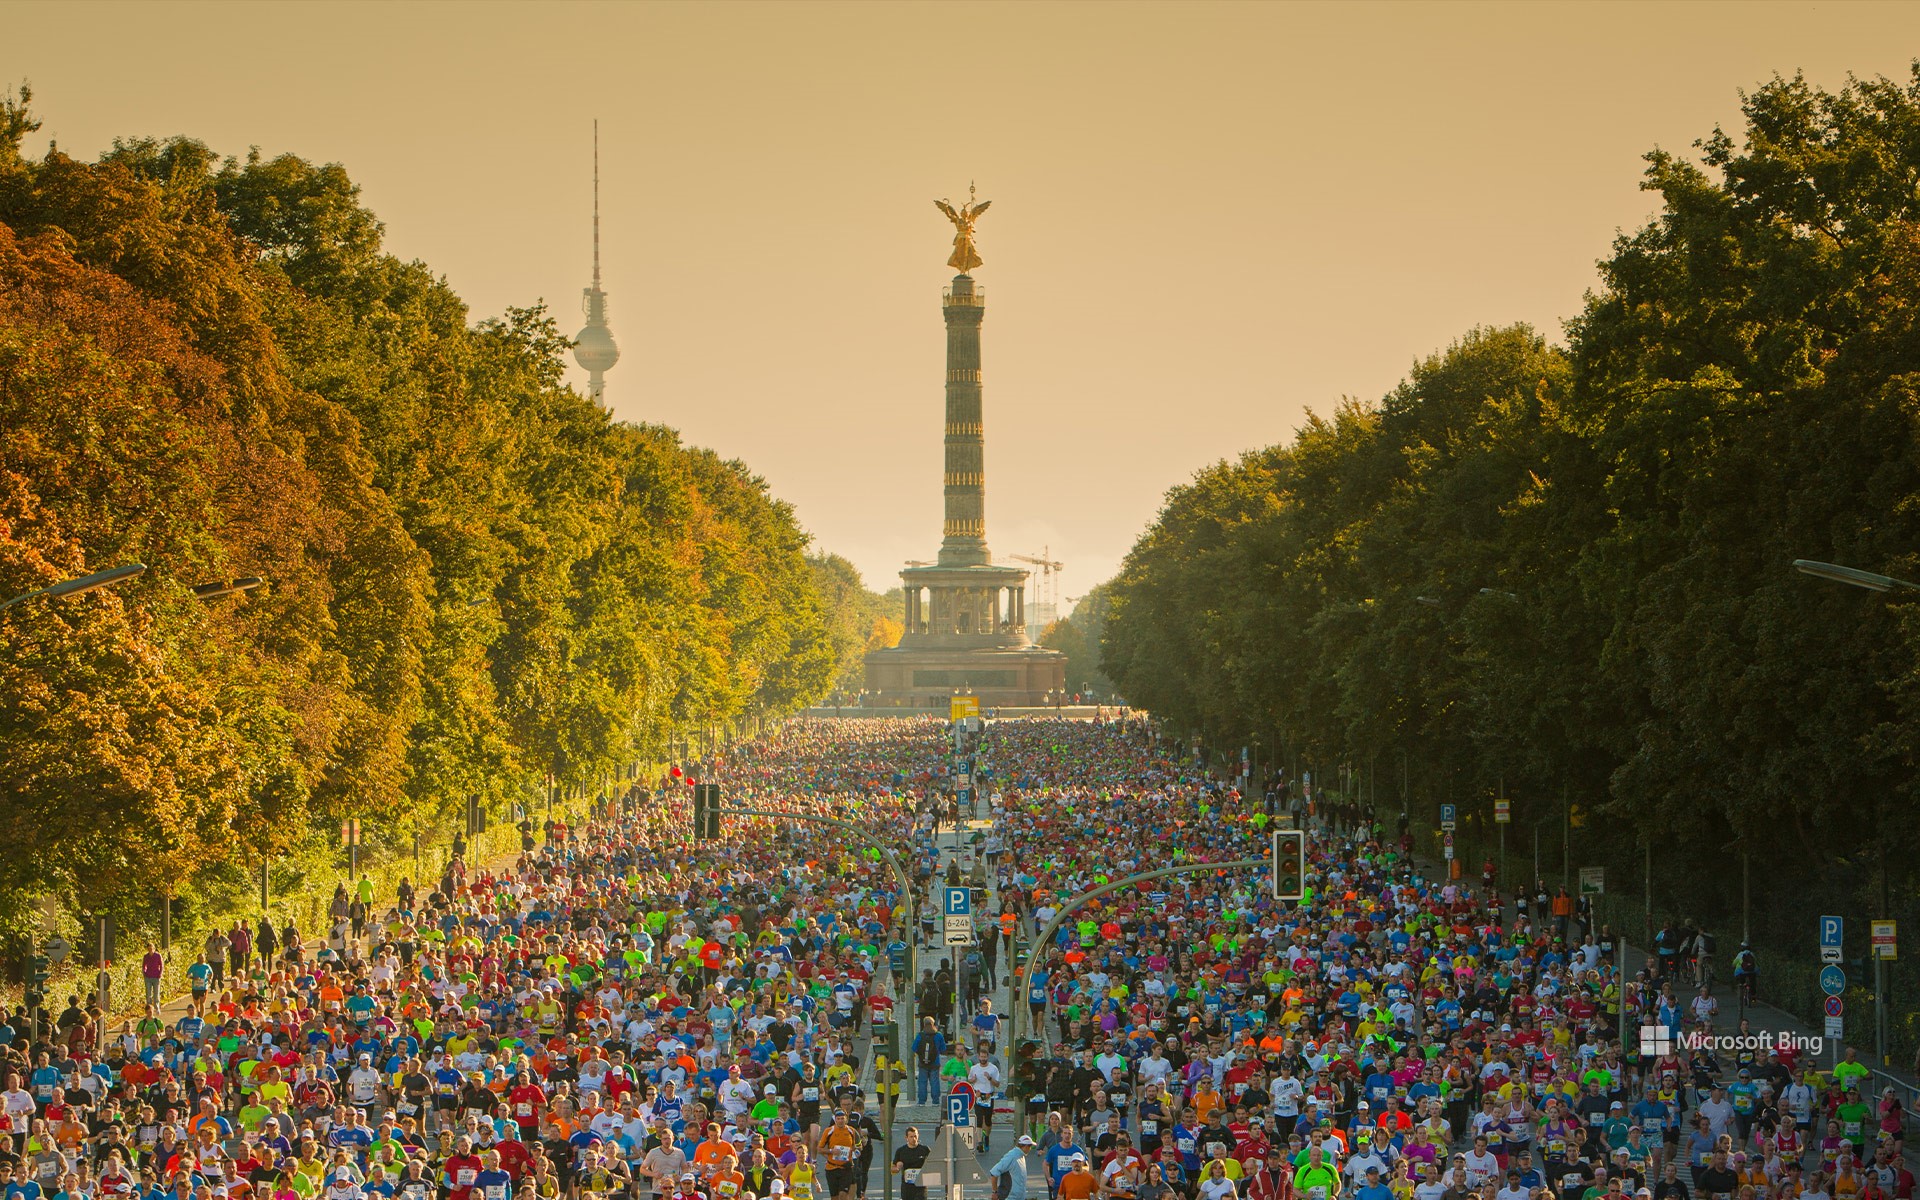 Berlin Marathon skyline with sunlight, Berlin